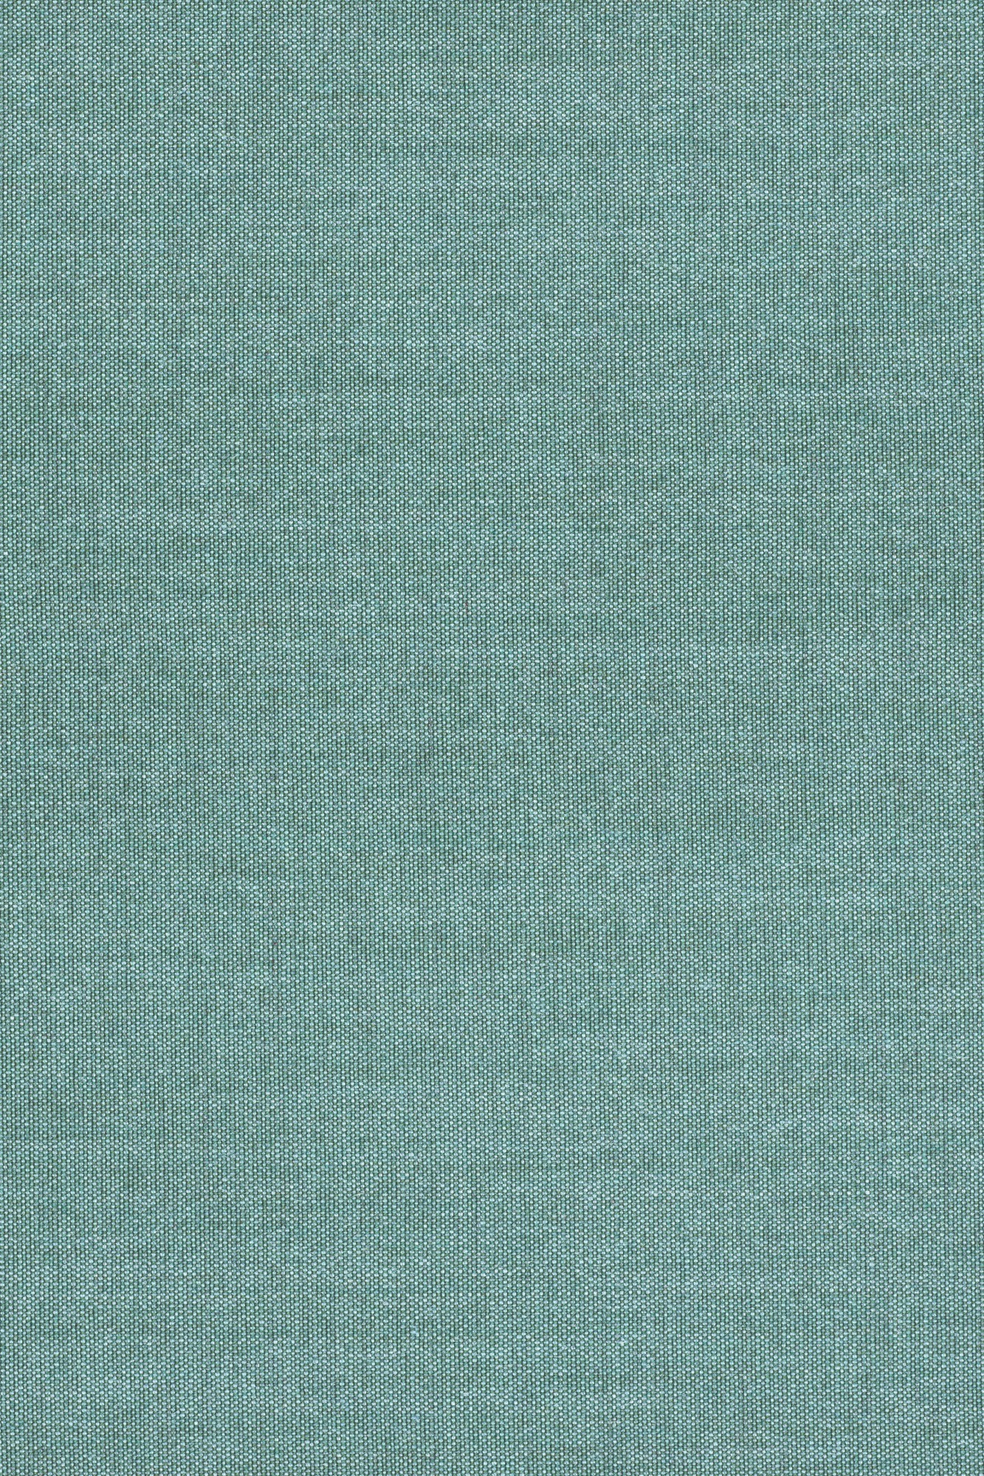 Fabric sample Canvas 2 836 green